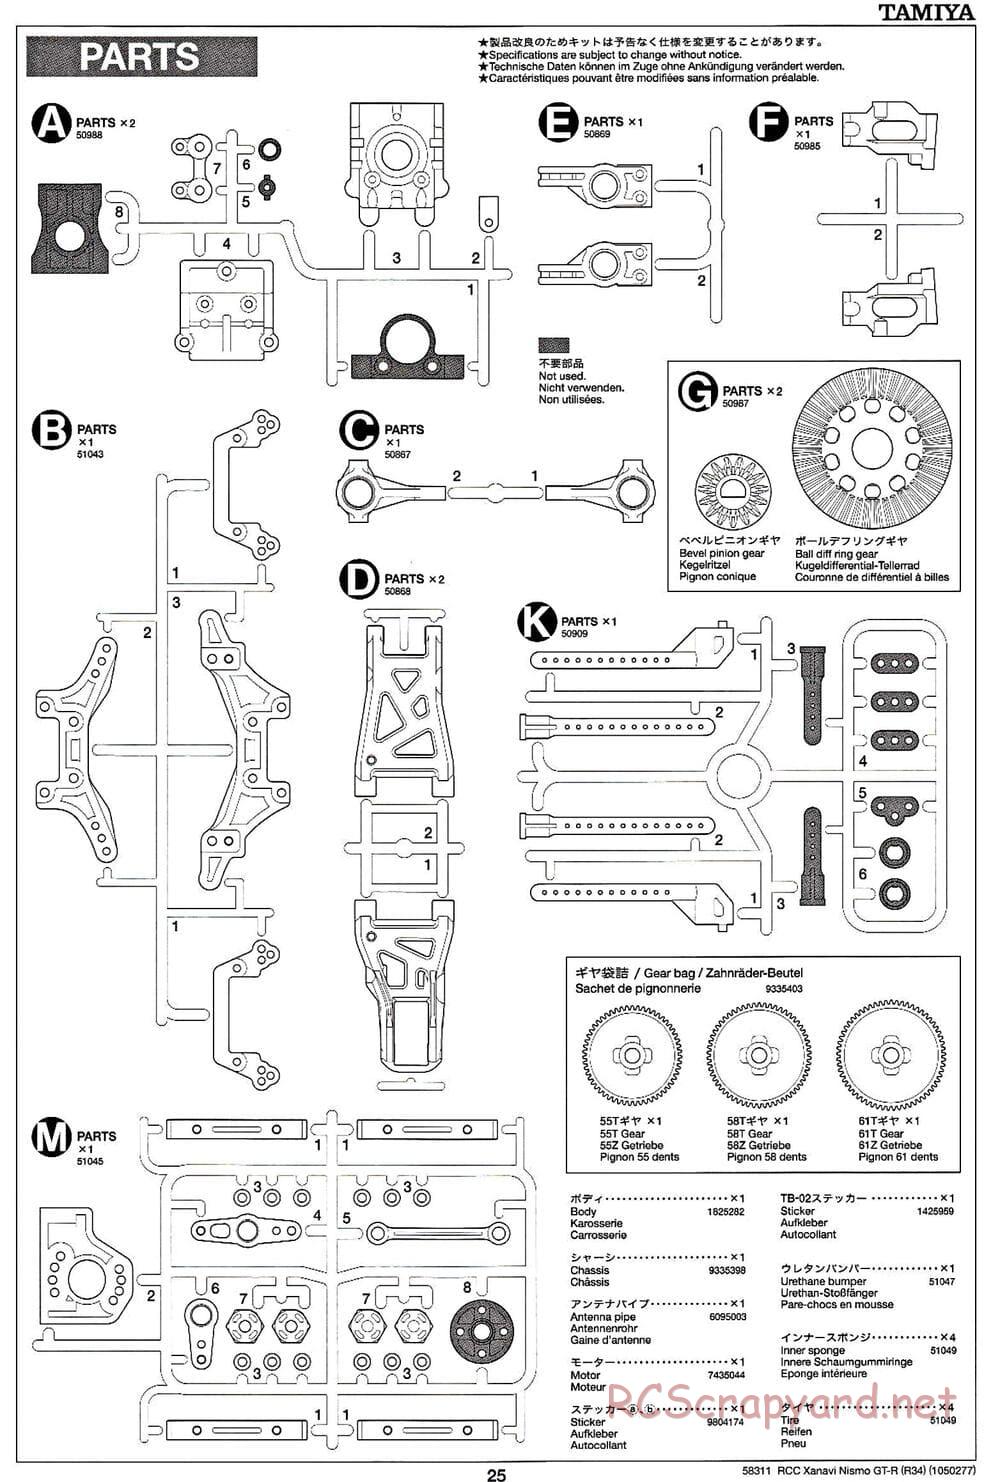 Tamiya - Xanavi Nismo GT-R (R34) - TB-02 Chassis - Manual - Page 25